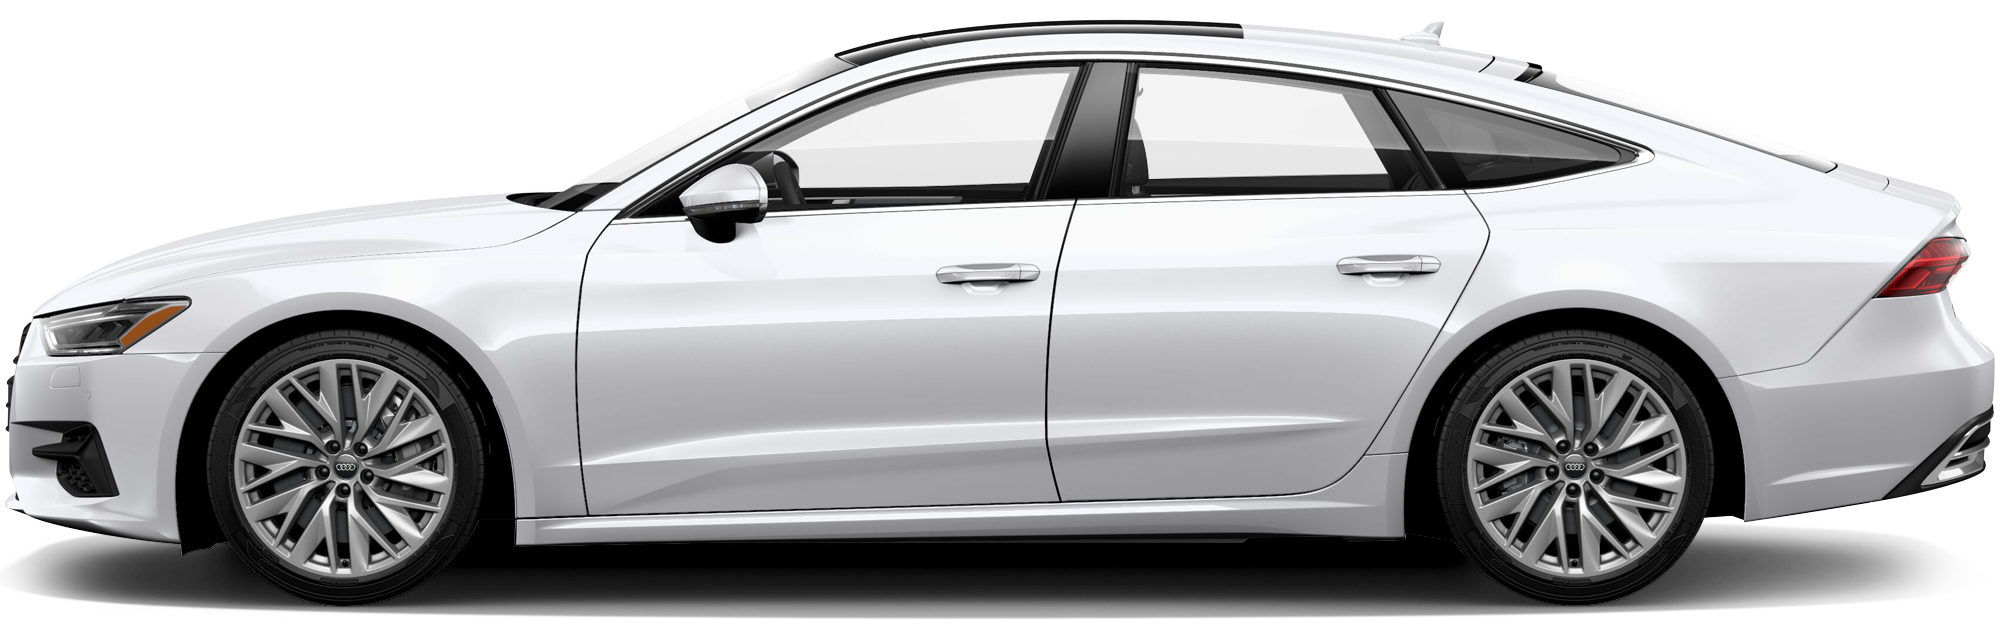 http://images.dealer.com/ddc/vehicles/2020/Audi/A7/Hatchback/trim_55_Premium_86324a/perspective/side-left/2020_24.png